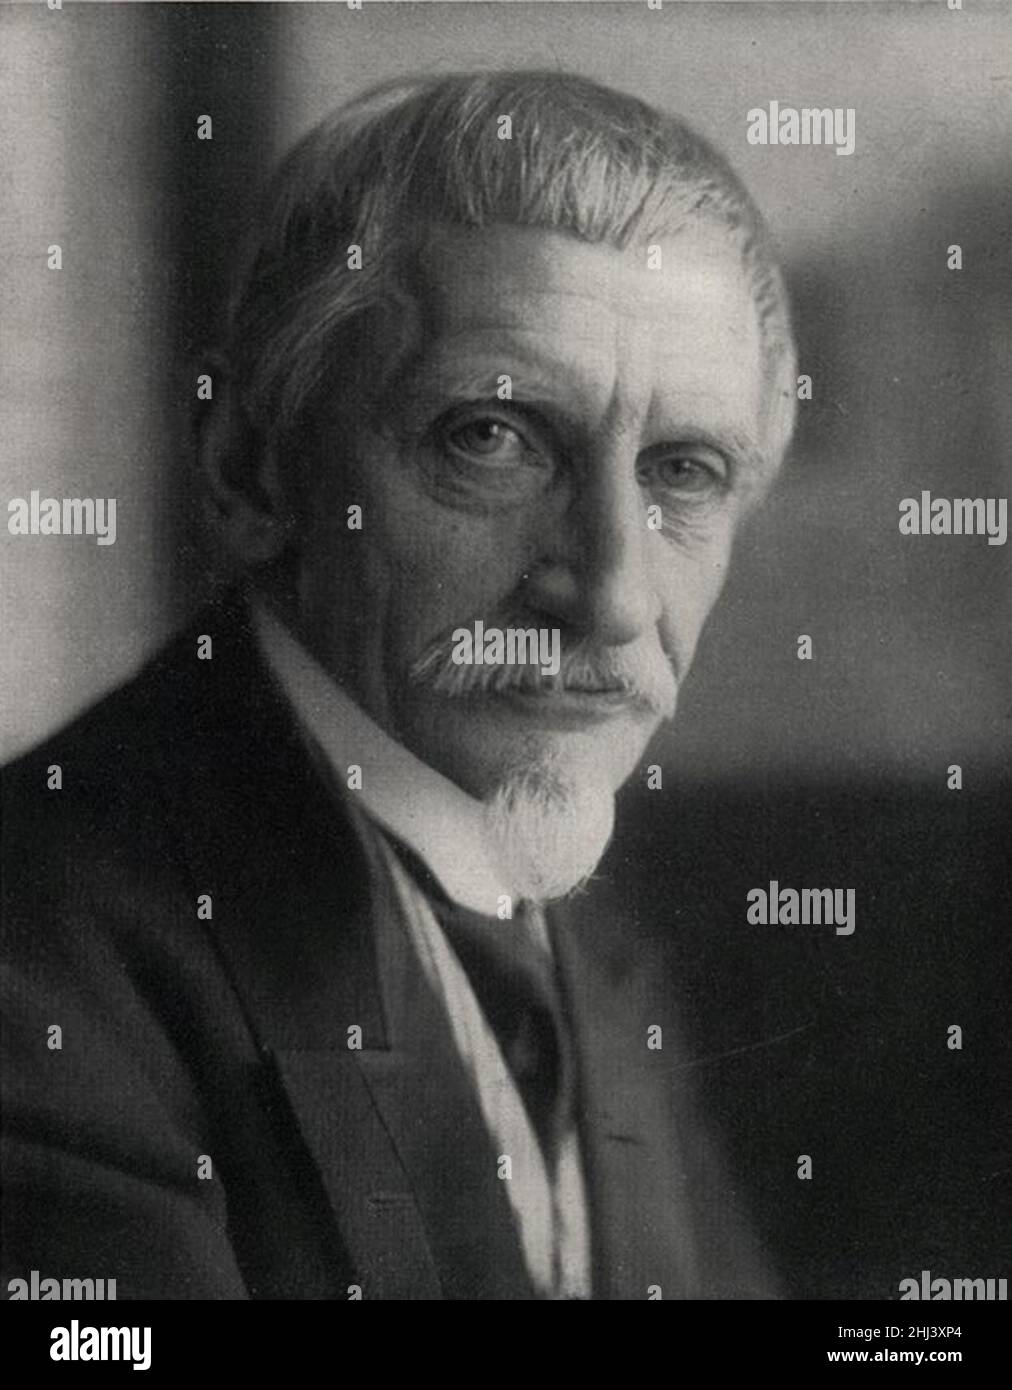 Stephan Sinding by Marta Wolff, 1914. Stock Photo